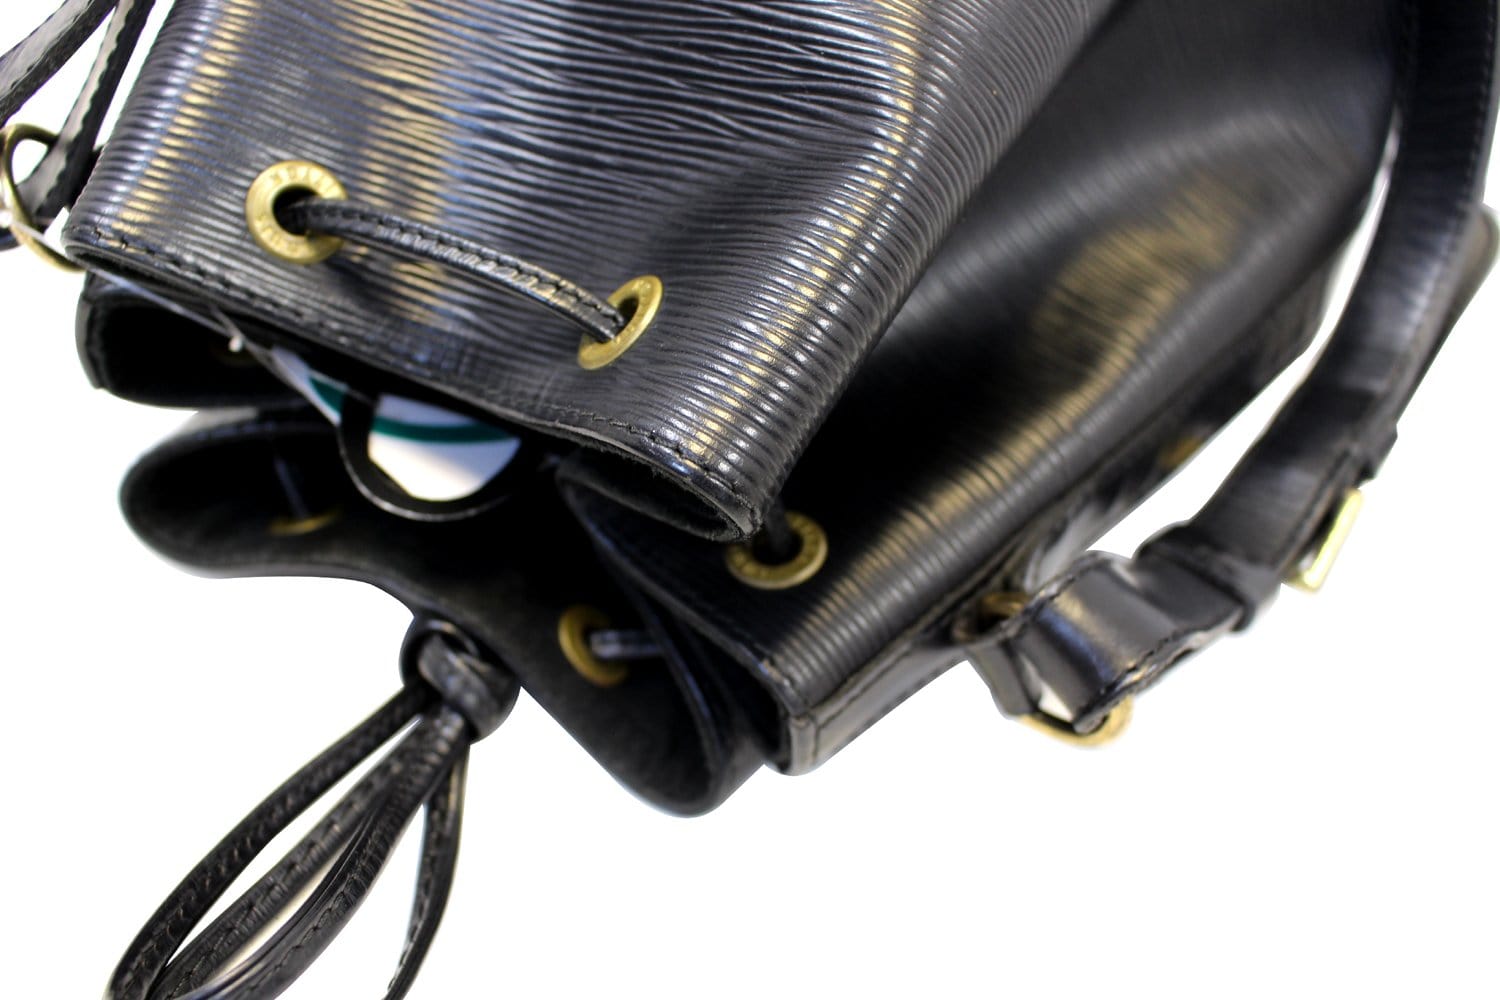 Louis Vuitton Blu/Black Epi Noe Shoulder Bag